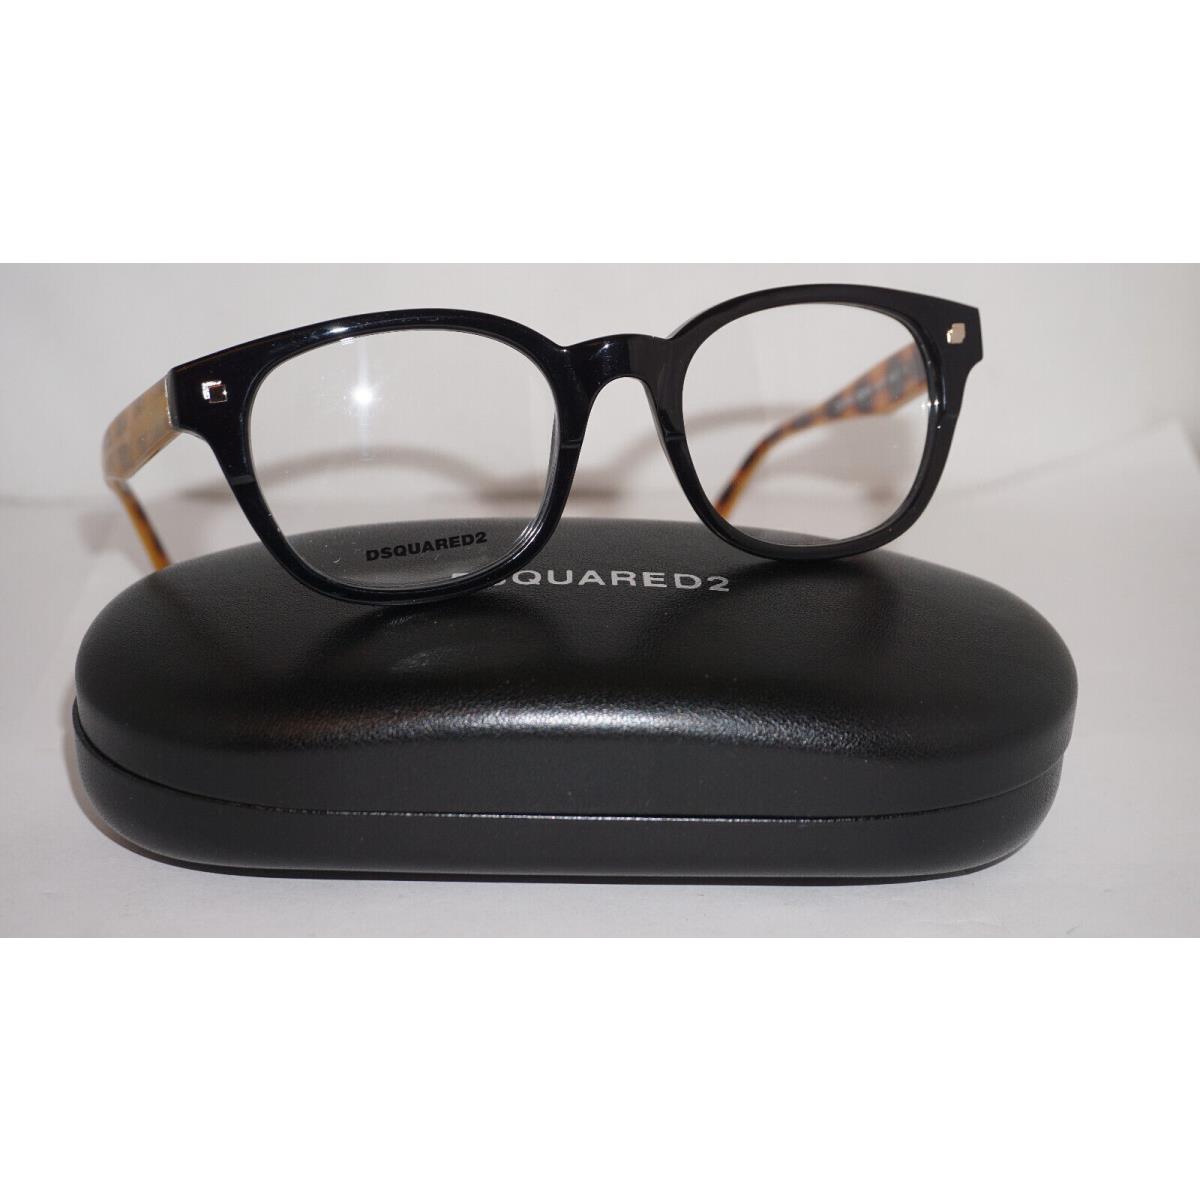 DSQUARED2 Eyeglasses Oxford Black Brown DQ5180 001 50 20 145